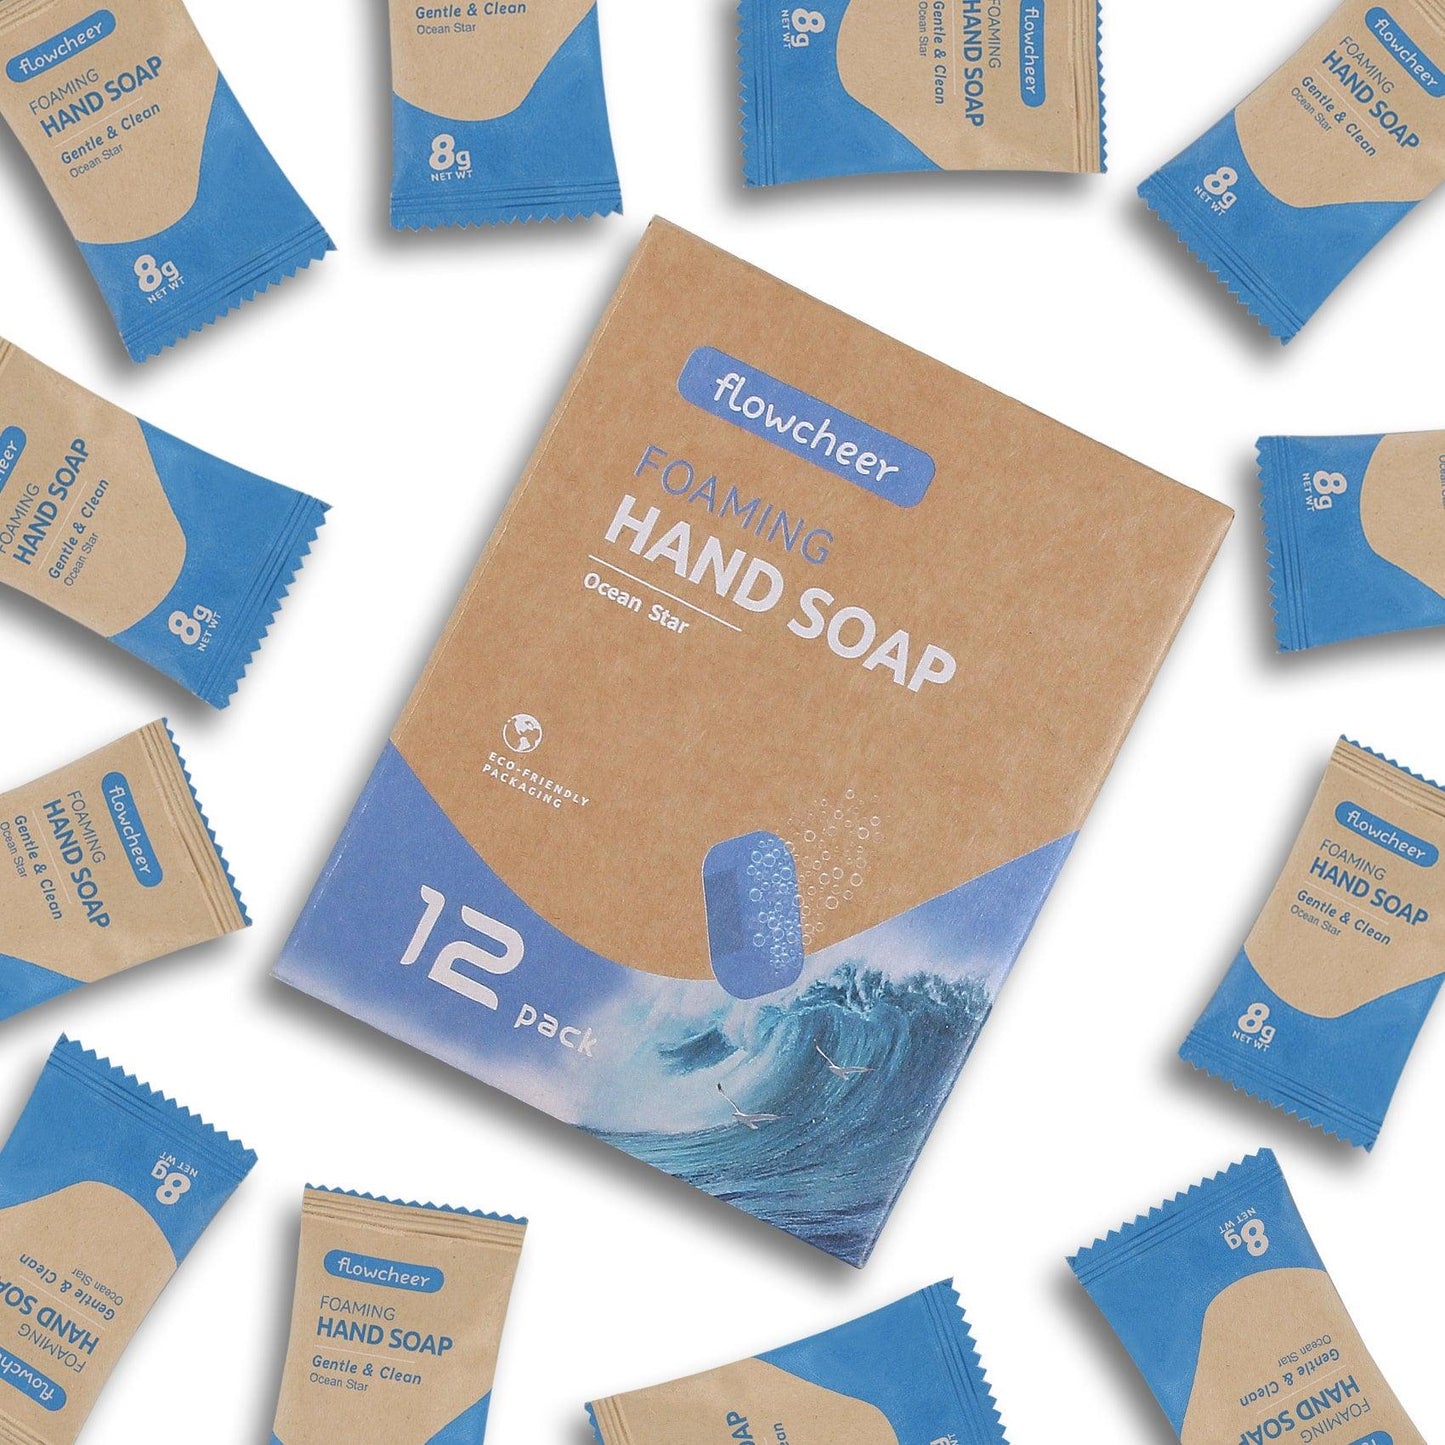 Foaming Hand Soap Refill 12 Tablets - Ocean Star Fragrance - Flowcheer